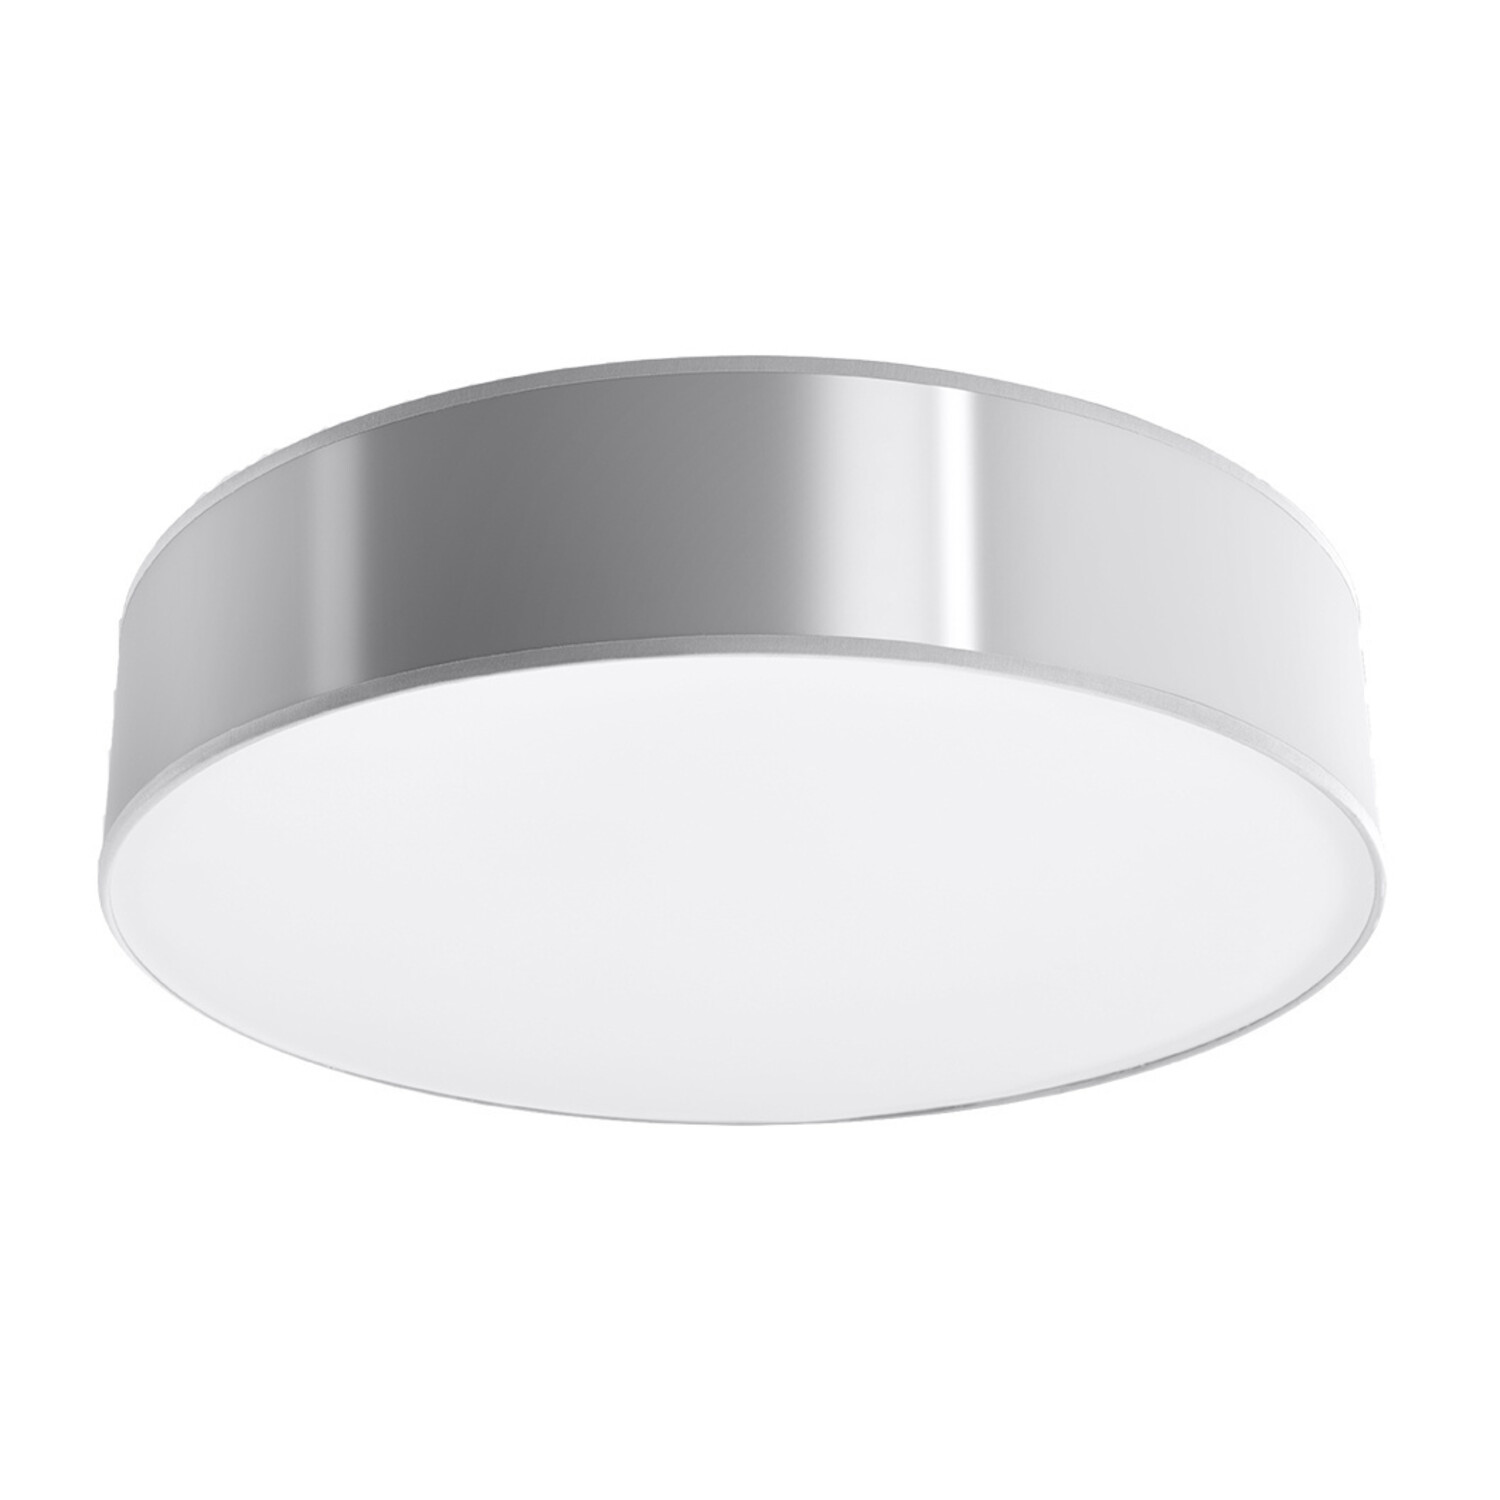 Sollux Lighting ARENA 55 exkl. Fassung - - Grau - Deckenspot E27 4x LED\'s 4x60W max